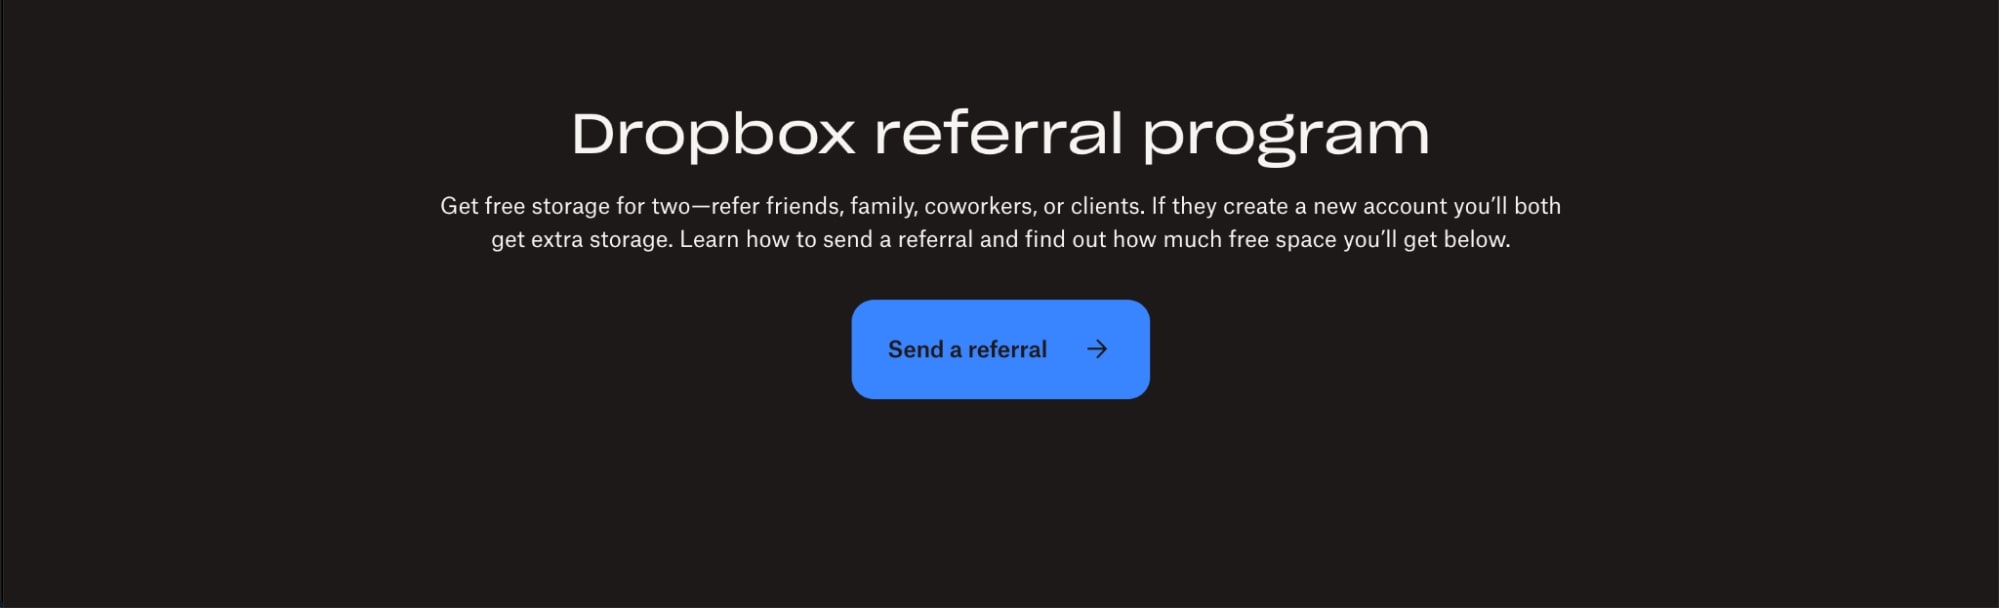 DropBox Referral Program Marketing Refer Invite